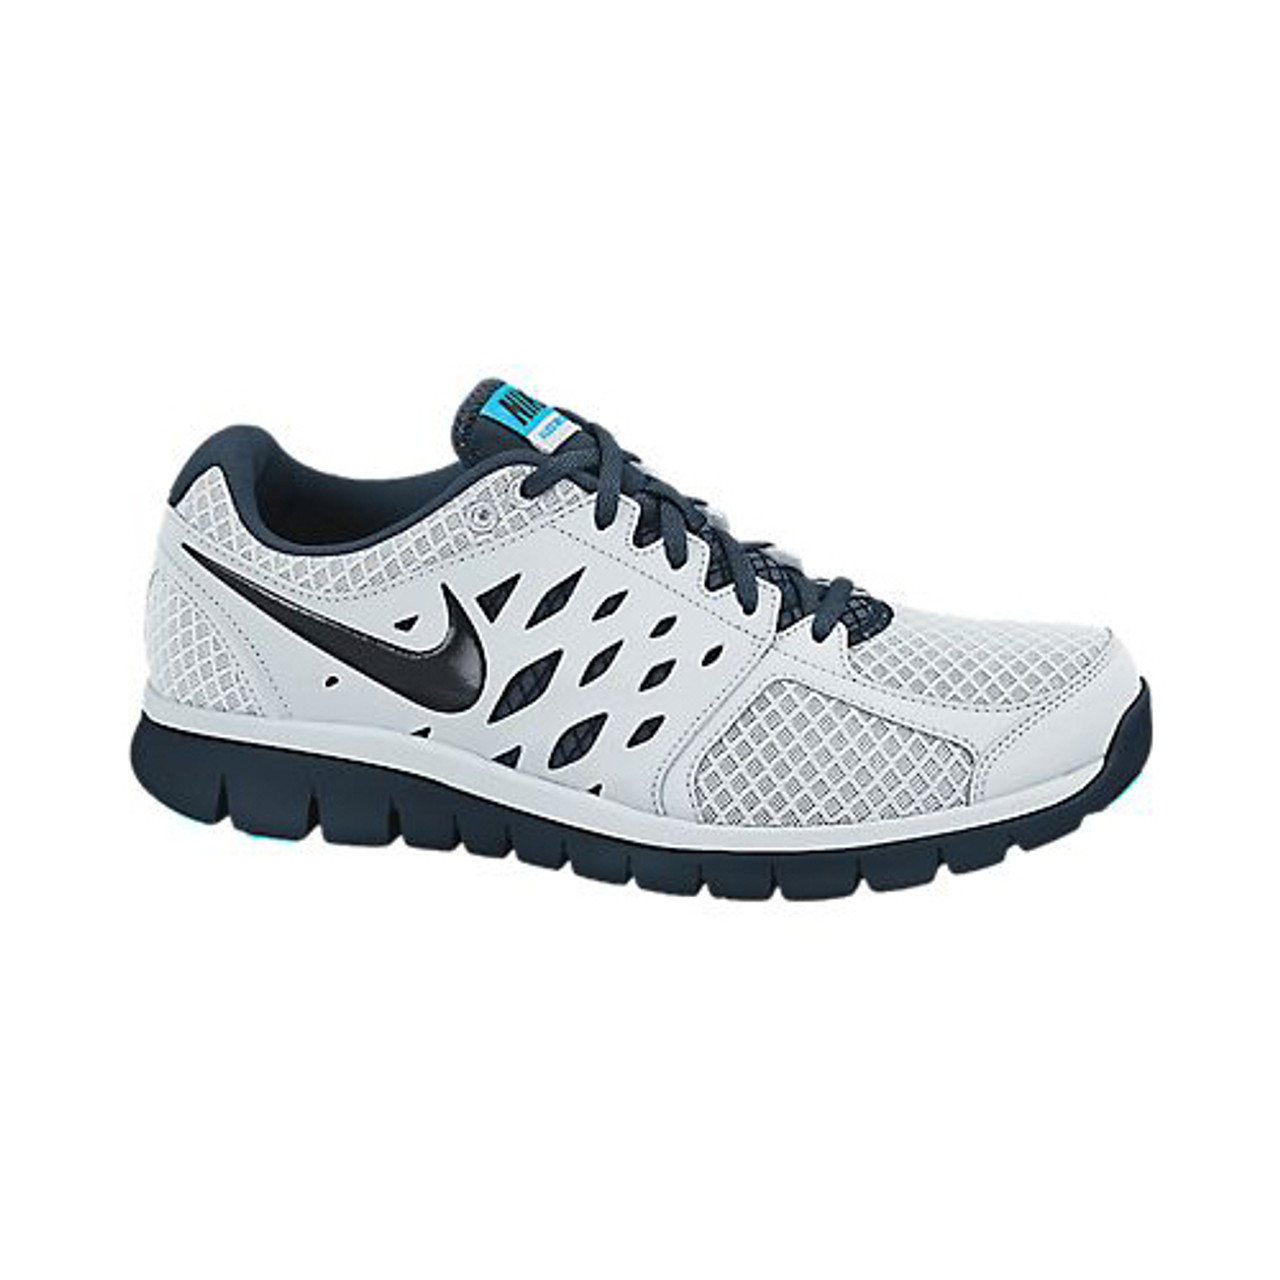 Nike Flex 2013 Run Mens Running Shoes - Platinum/Armory Navy/Blue/Black Discount Nike Men's Athletic & More - Shoolu.com | Shoolu.com